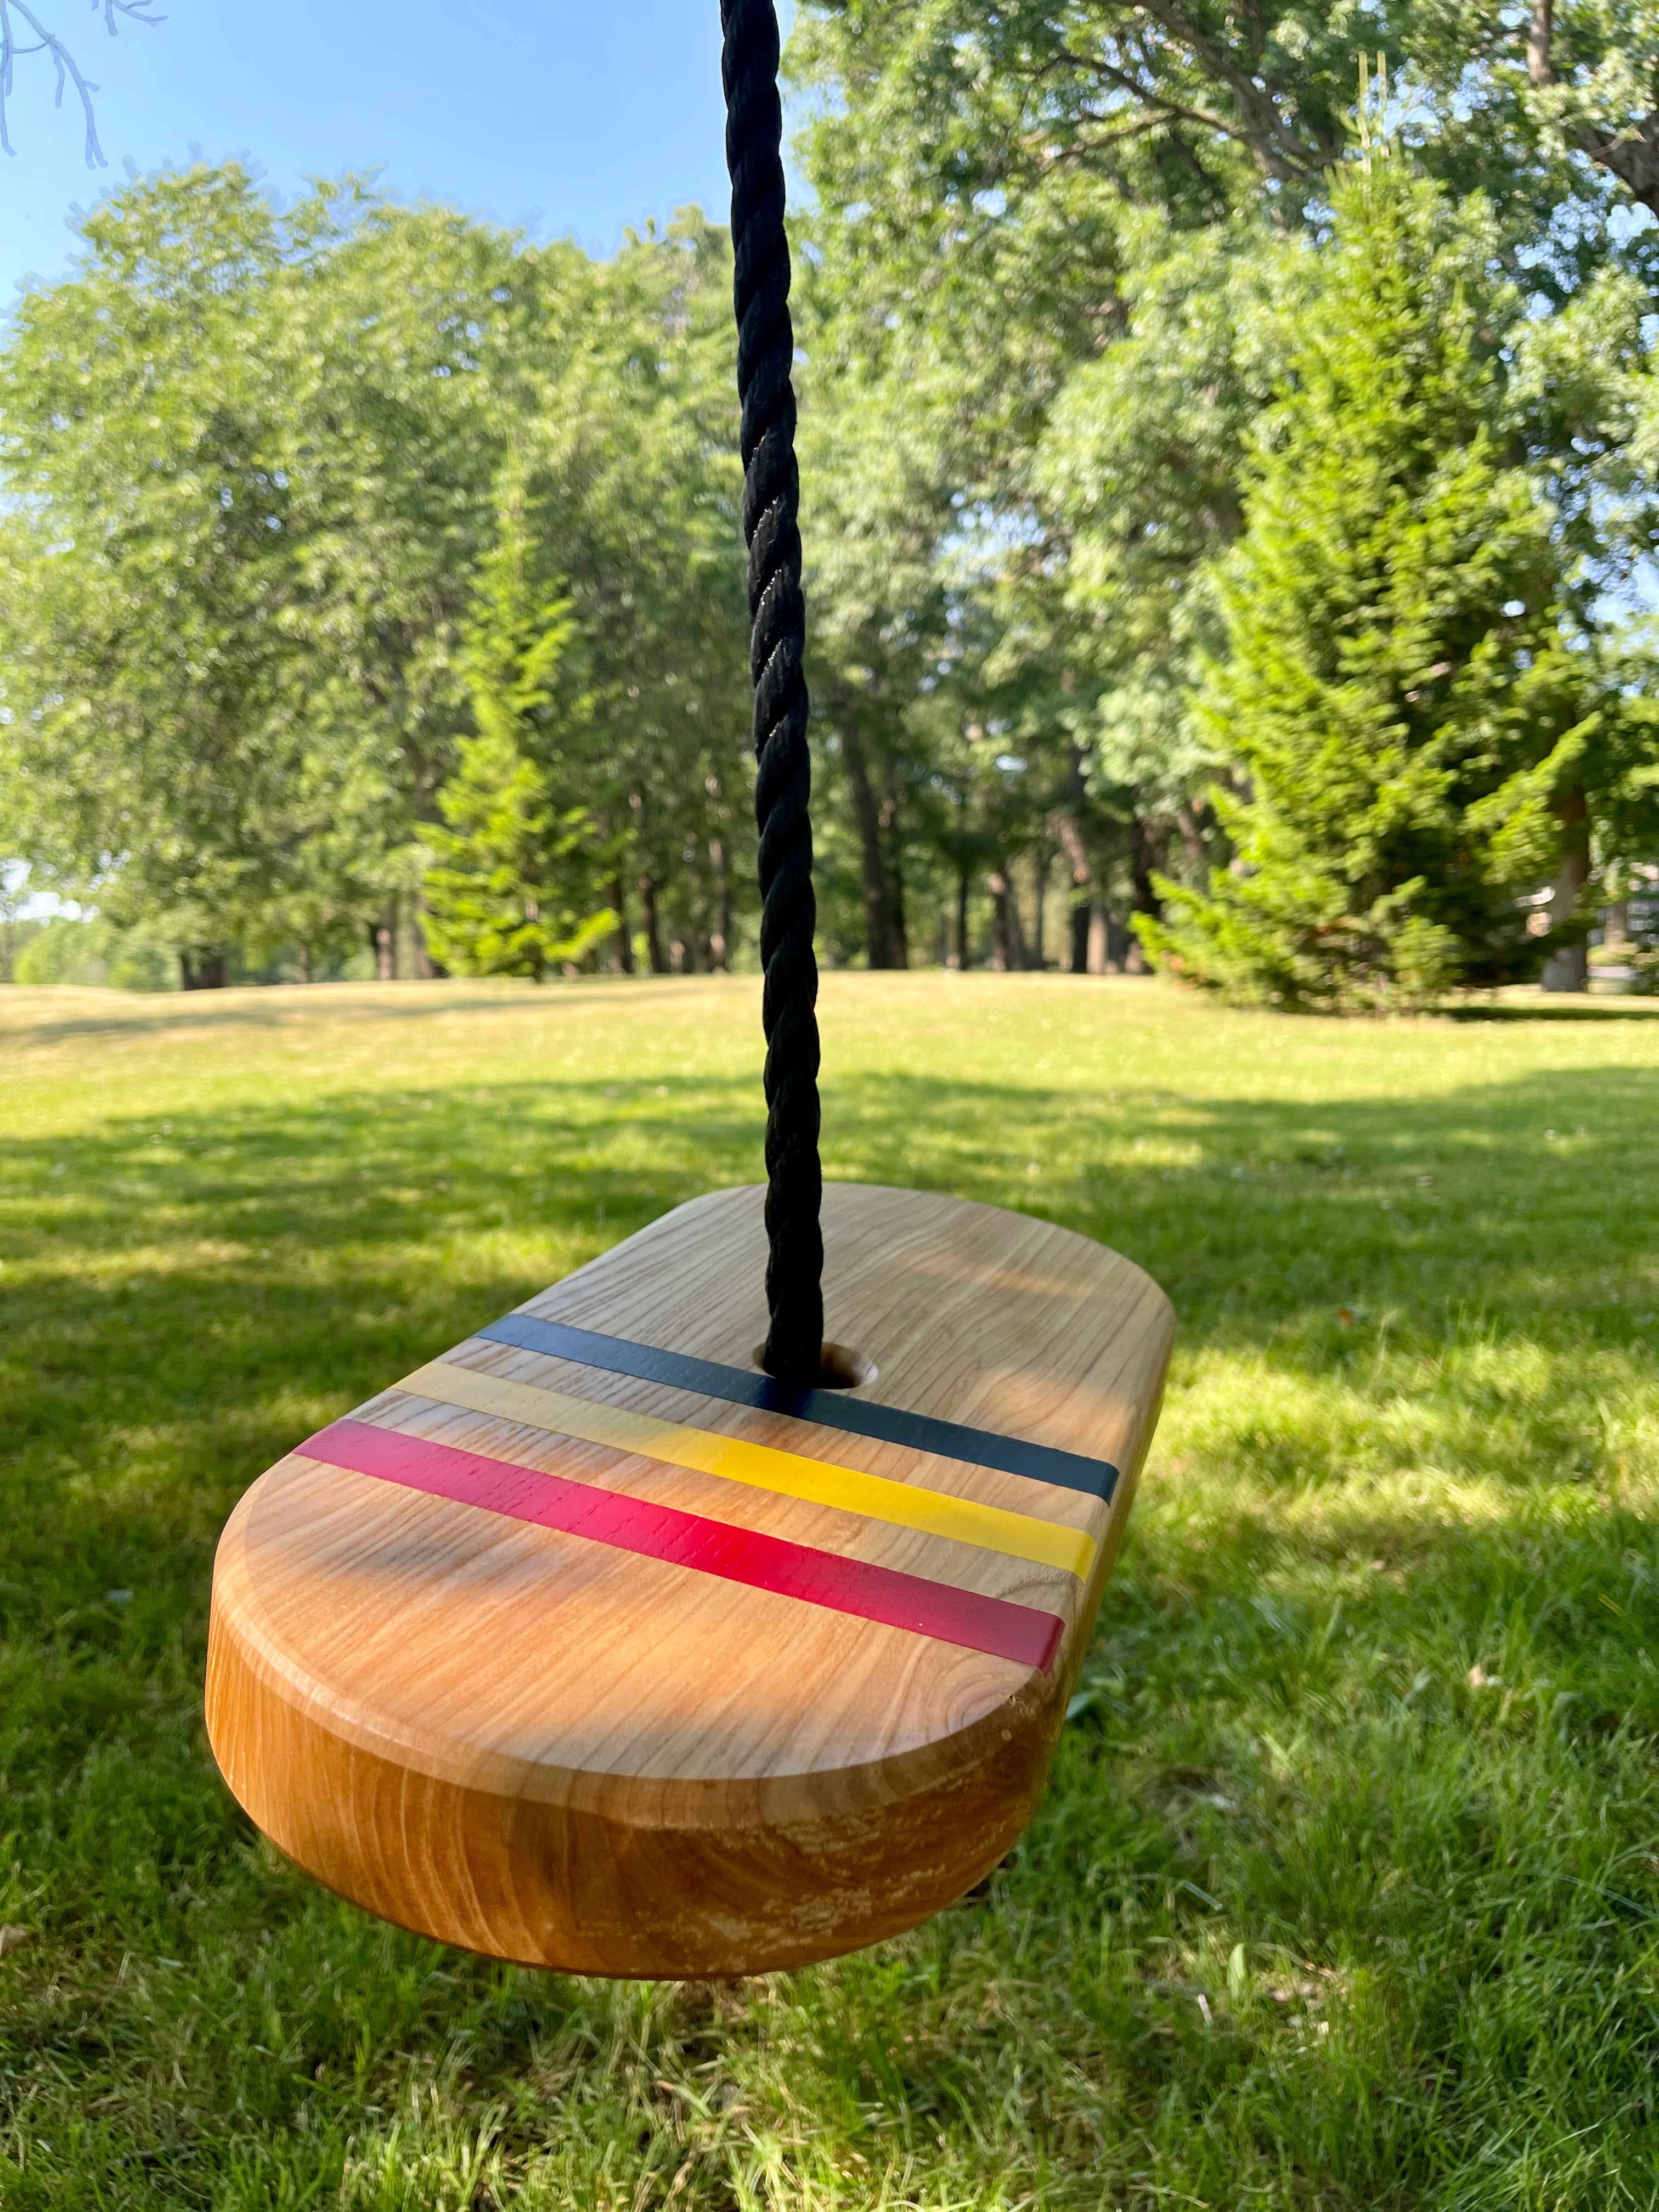 Painted Oval Tree Swing – The Original Tree Swing